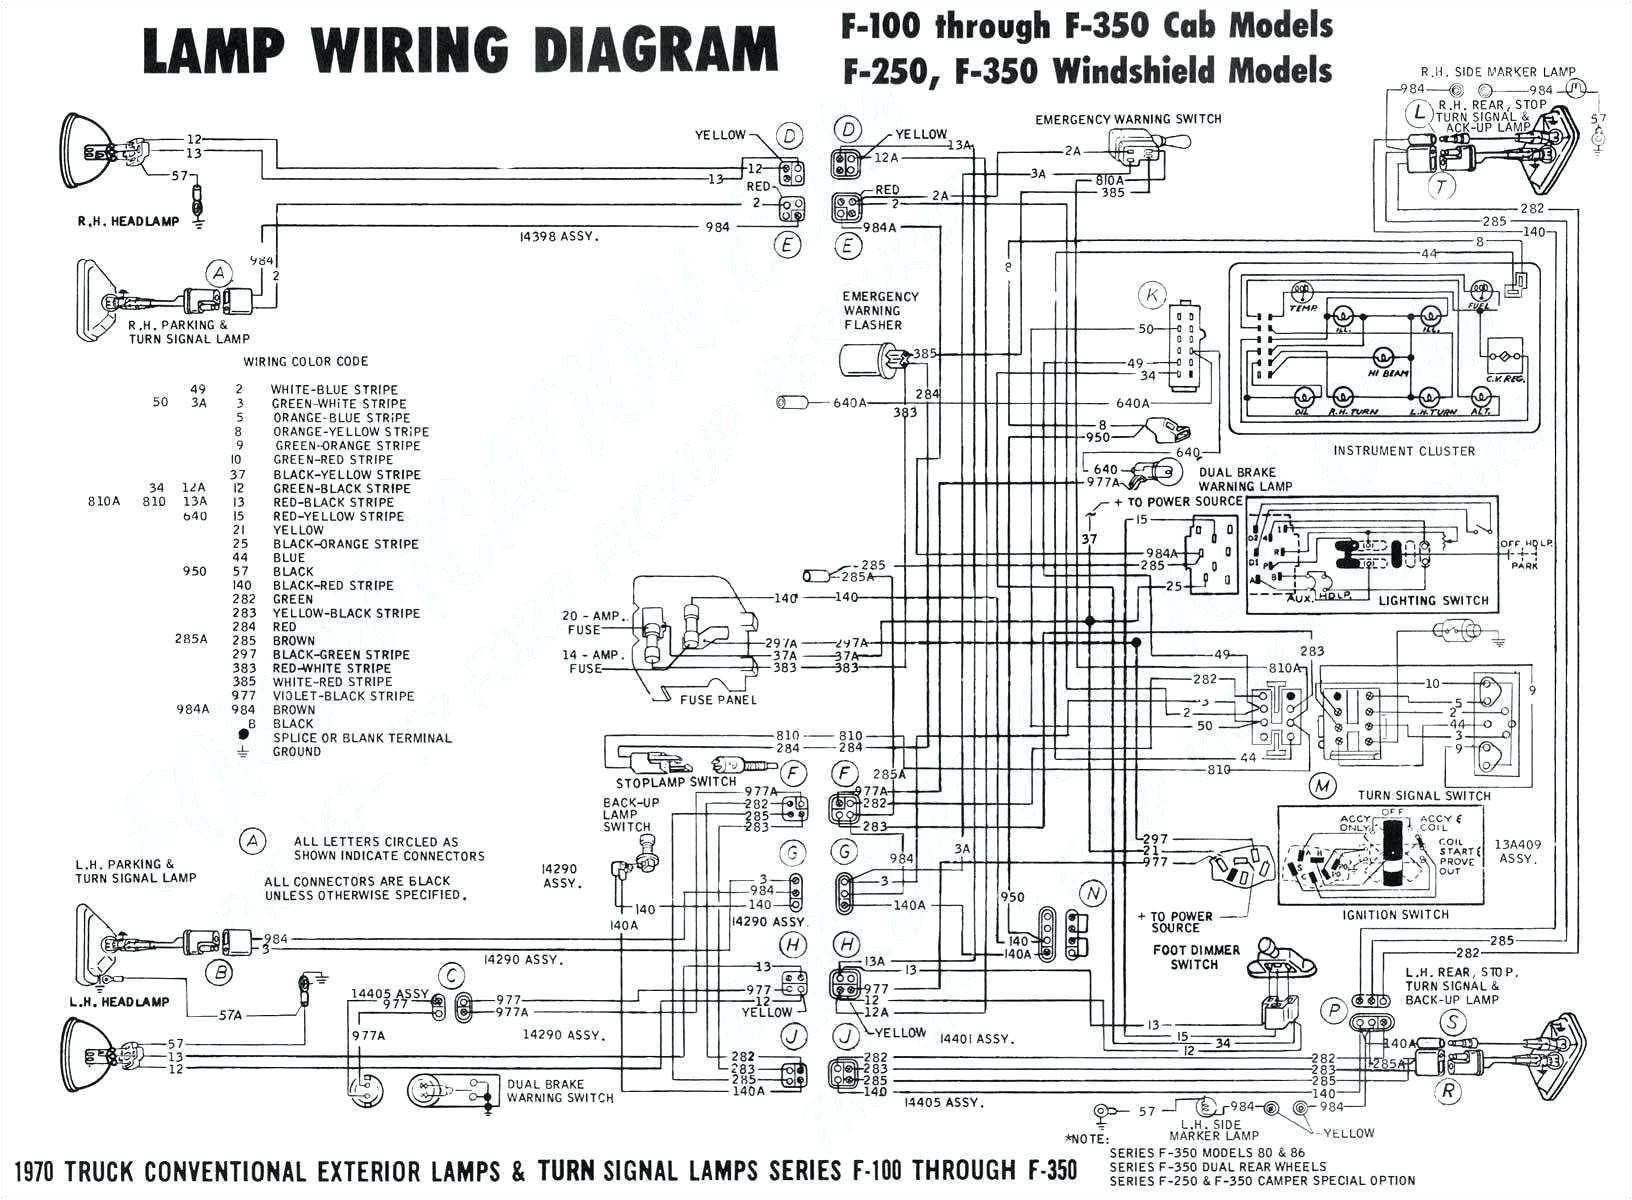 2000 jetta cruise control wiring diagram wiring diagrams recent 2000 jetta cruise control wiring diagram free download